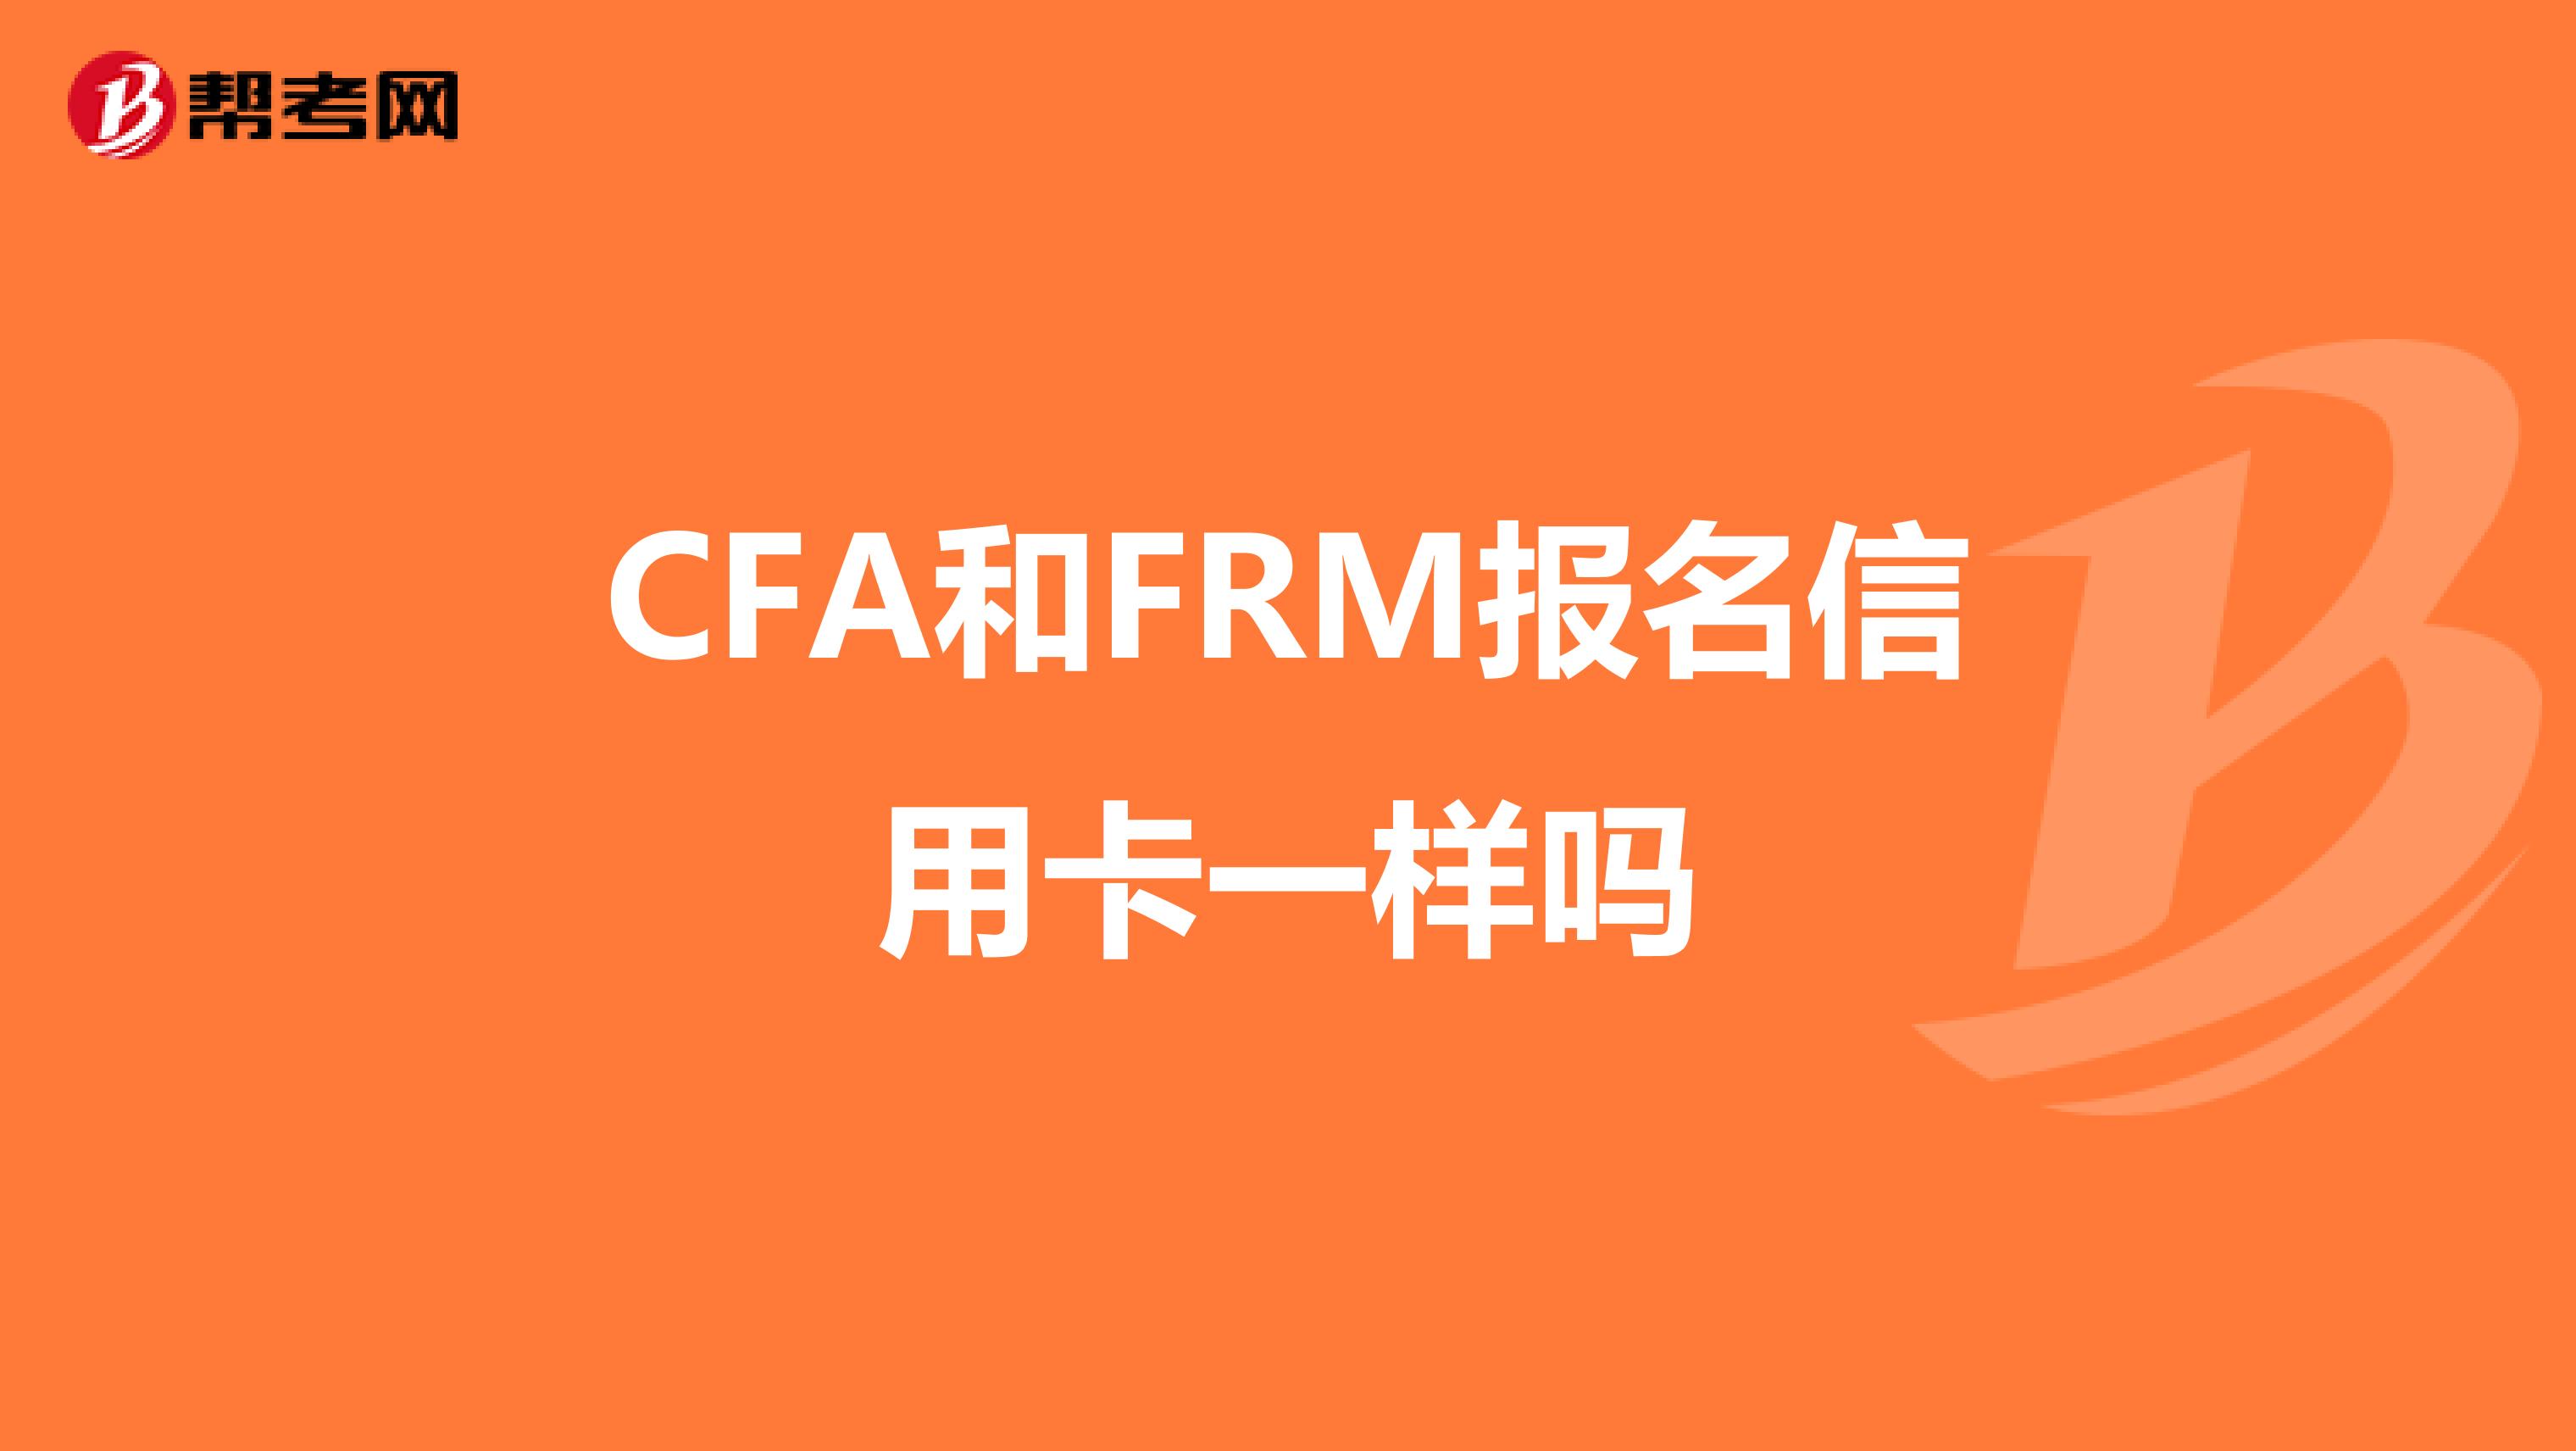 CFA和FRM报名信用卡一样吗